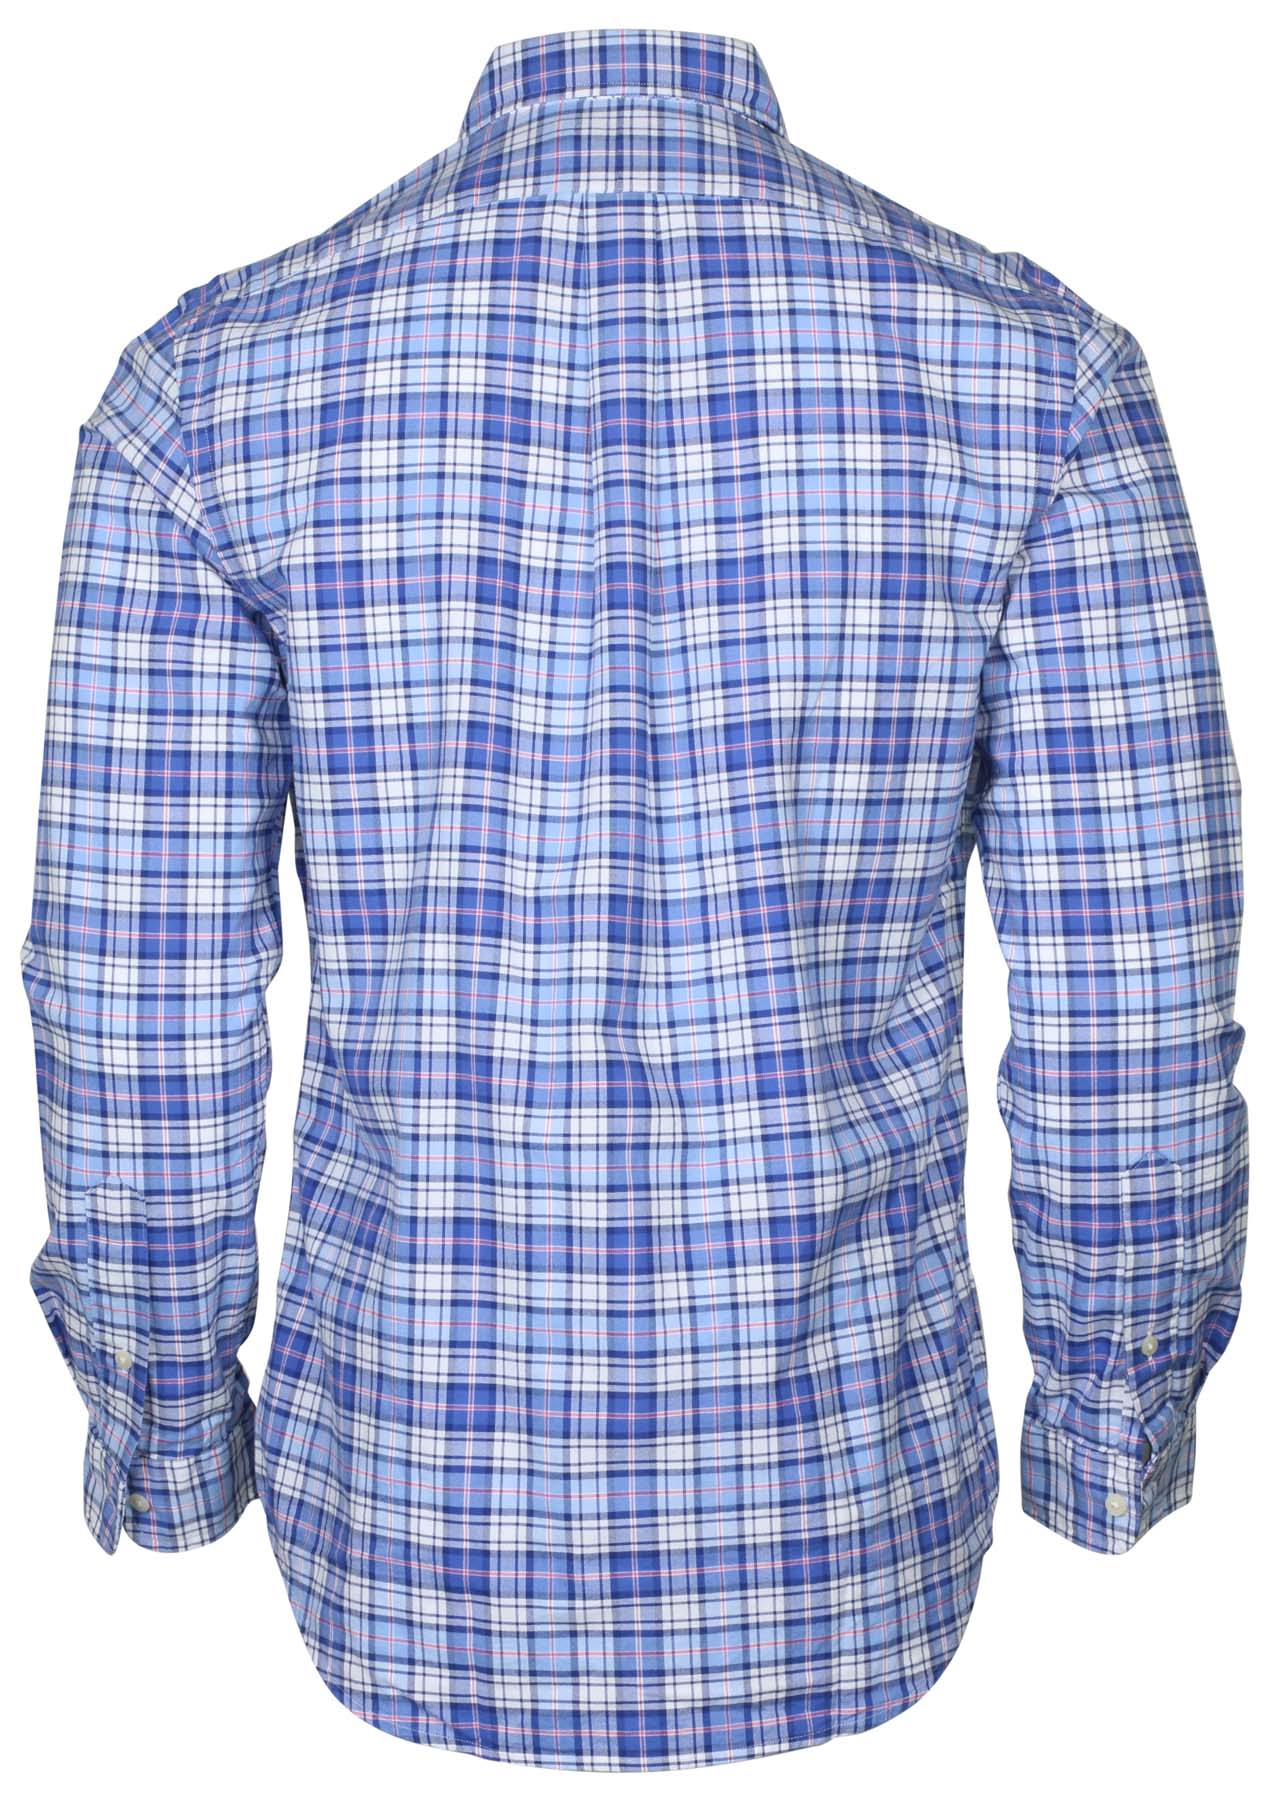 Polo RL Men's Slim Fit Long Sleeve Shirt | eBay